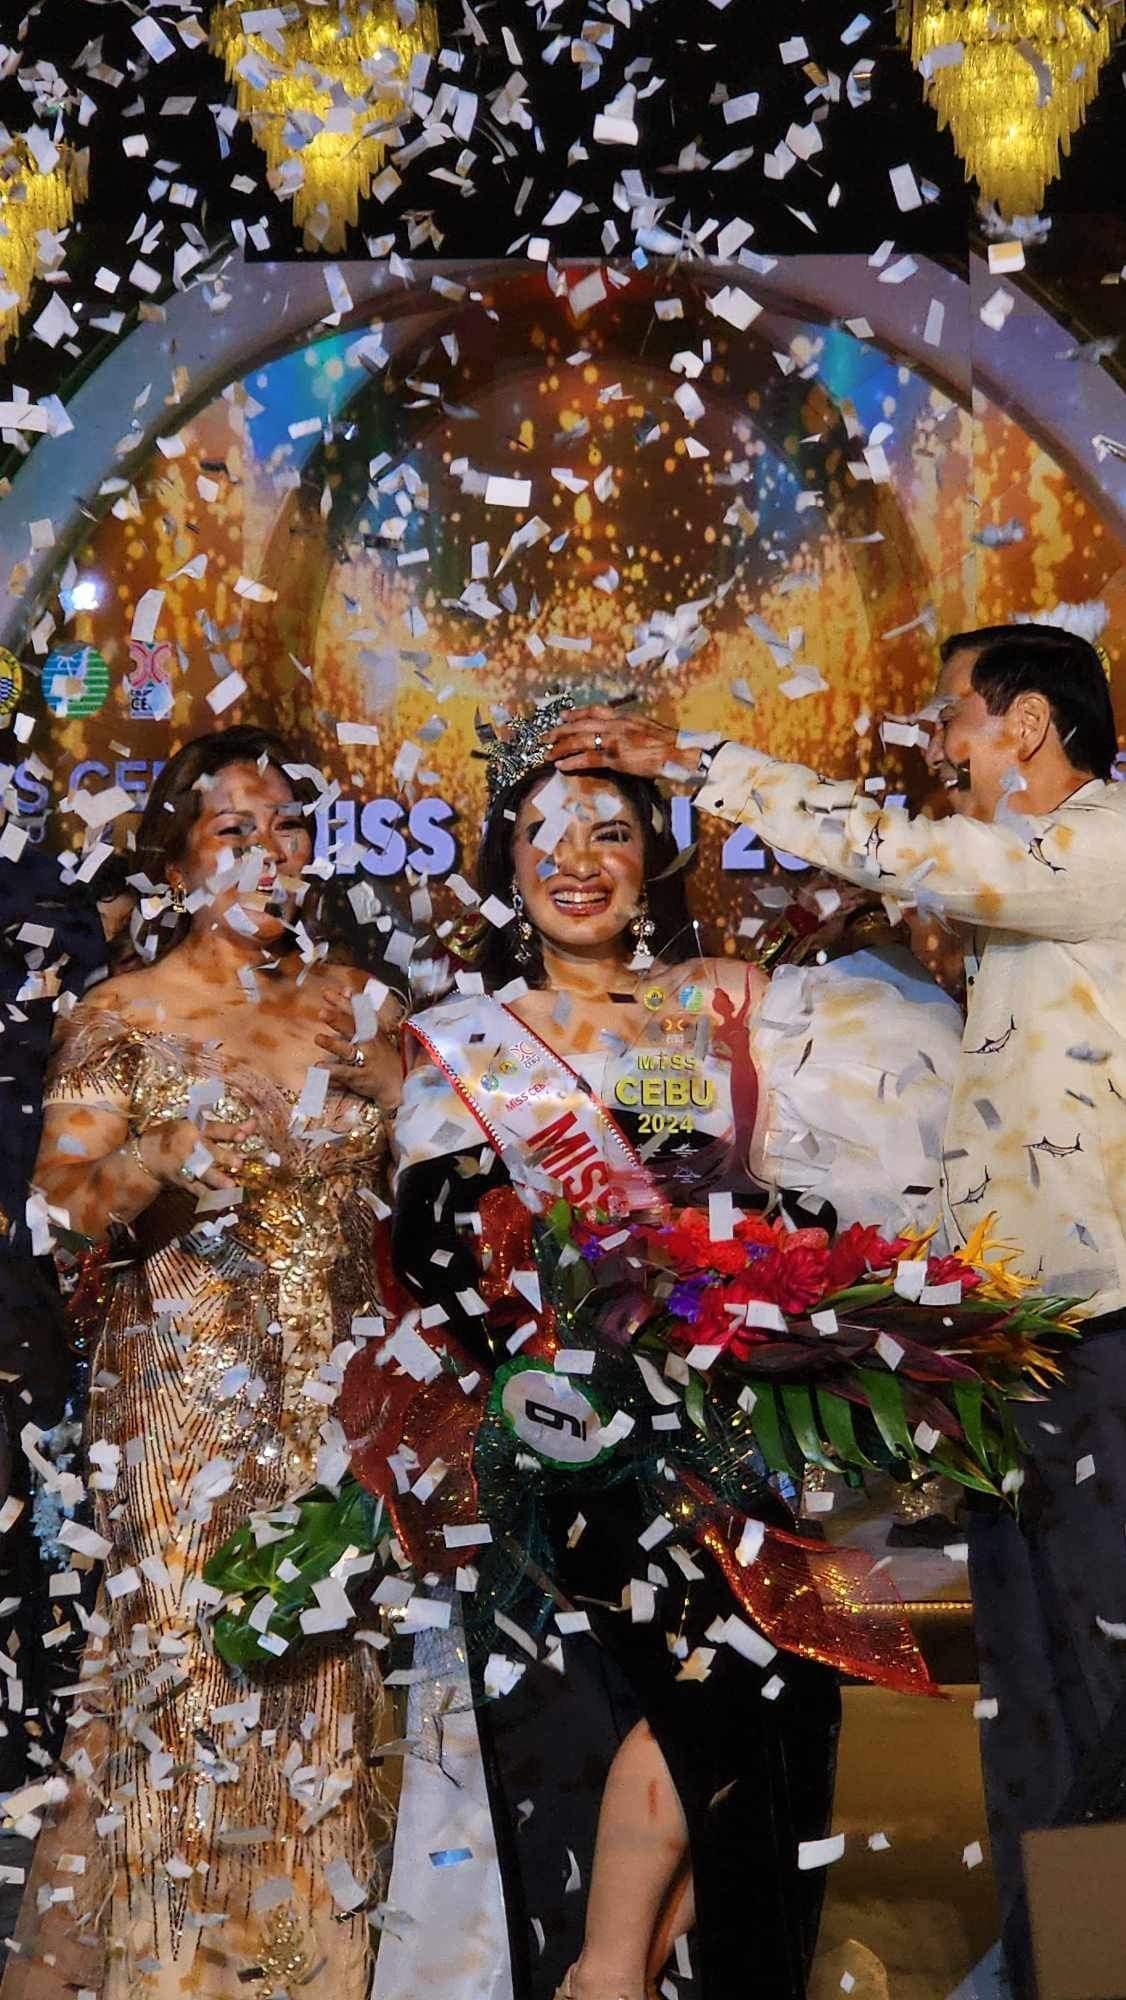 Zoe Cameron’s triumph as Miss Cebu 2024 illuminates a night of elegance and impact